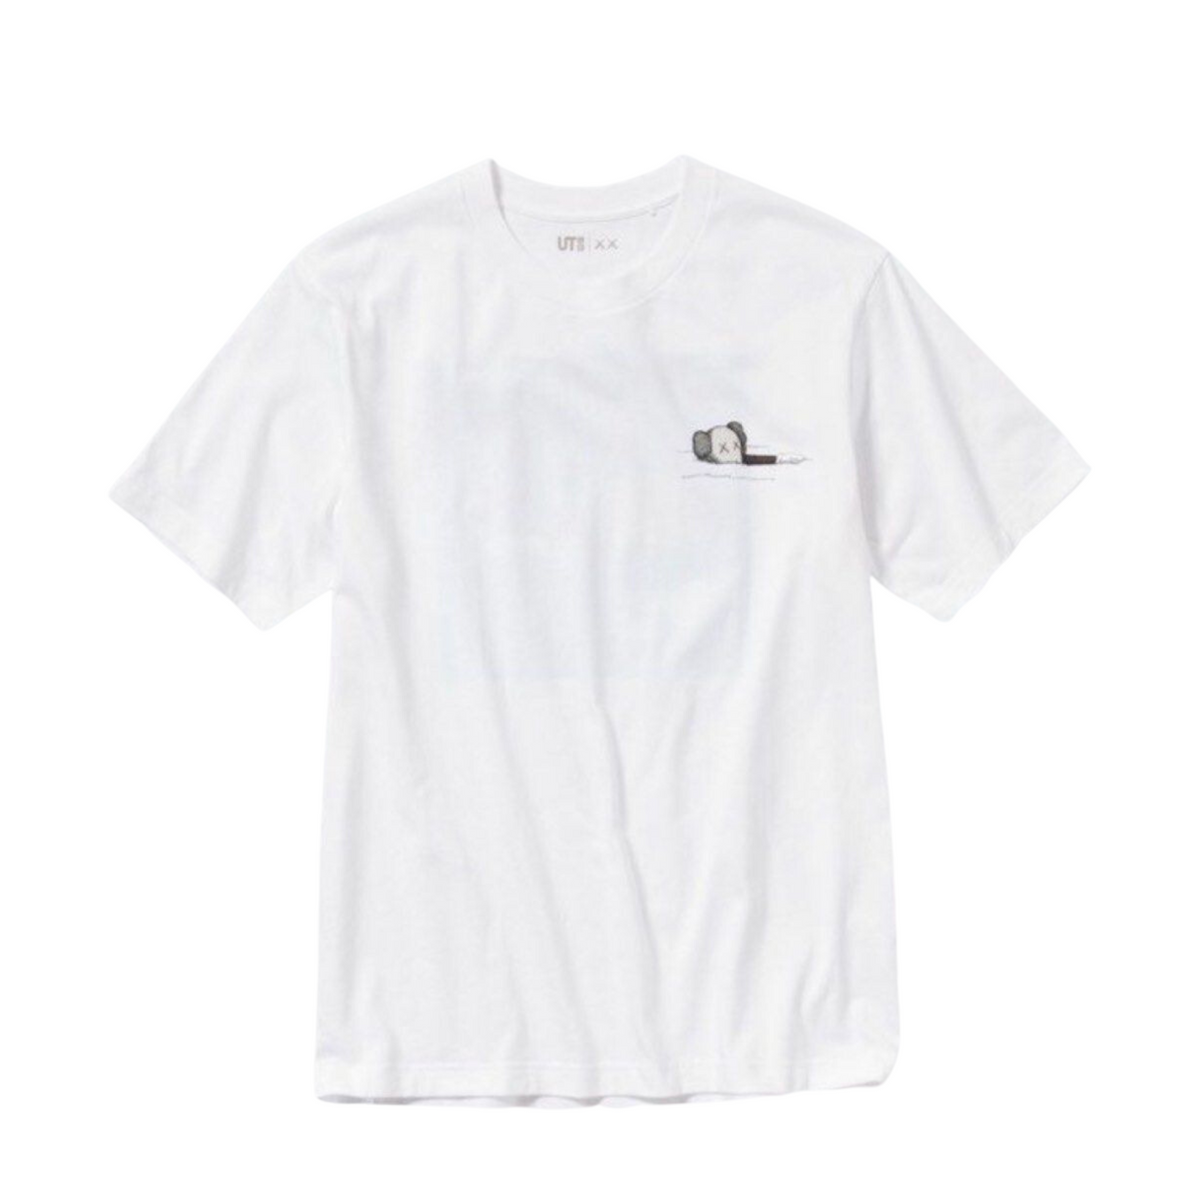 KAWS x Uniqlo UT Short Sleeve Artbook Cover T-shirt - T-Shirt - street-bill.dk